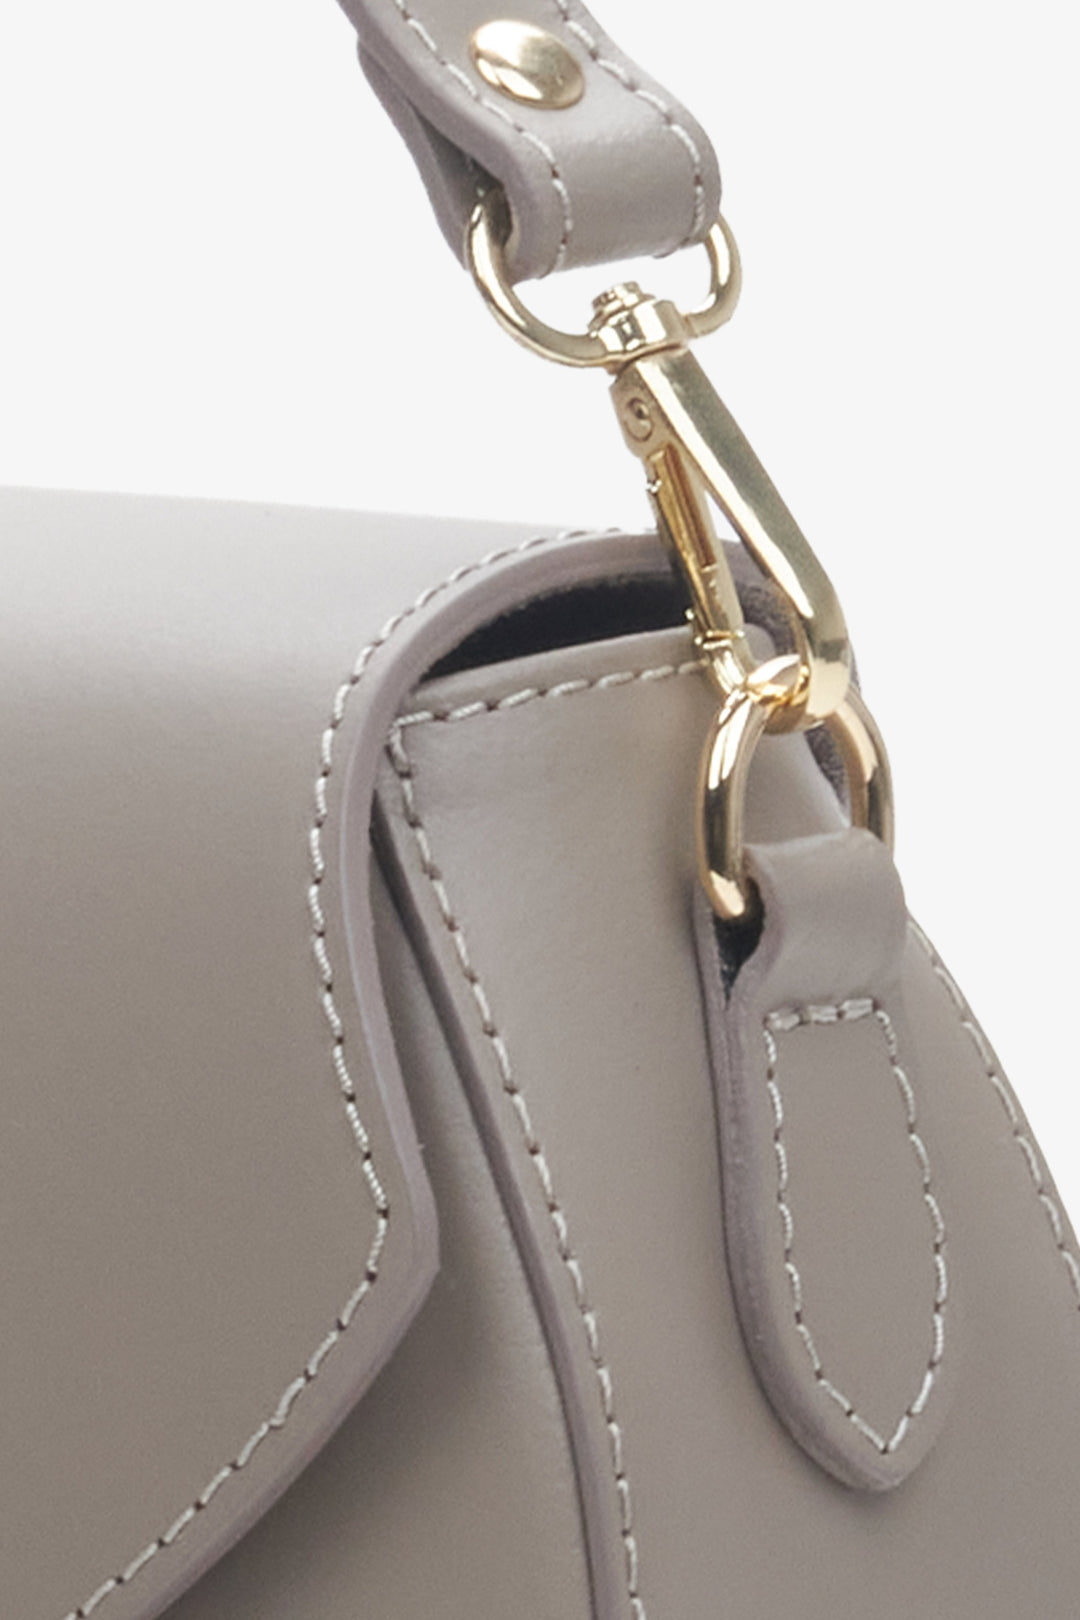 U-shaped women's handbag handmade in Italy - a close-upon details.